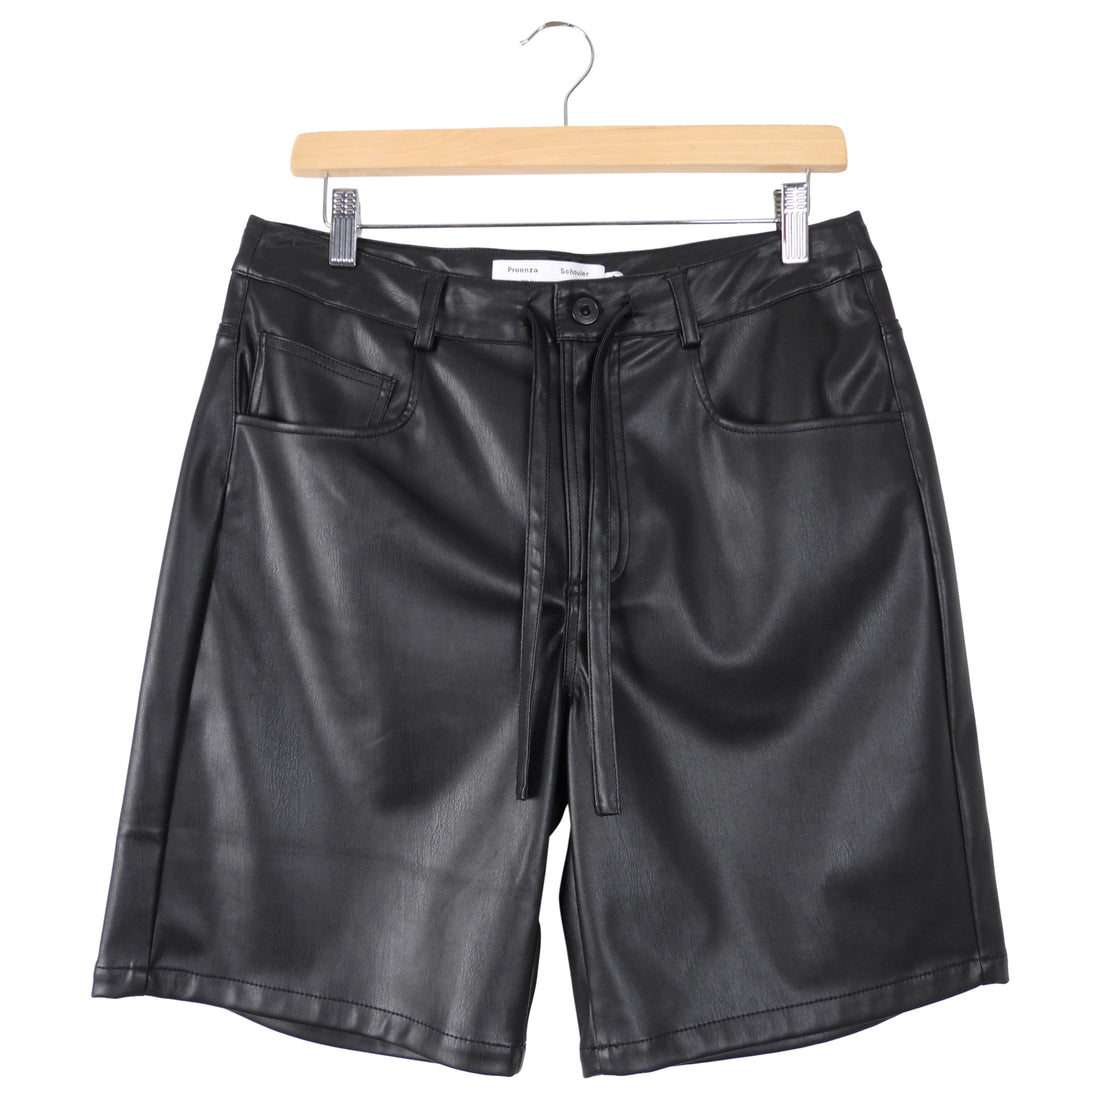 Proenza Schouler White Label Faux Leather Half Shorts - M (6/8)